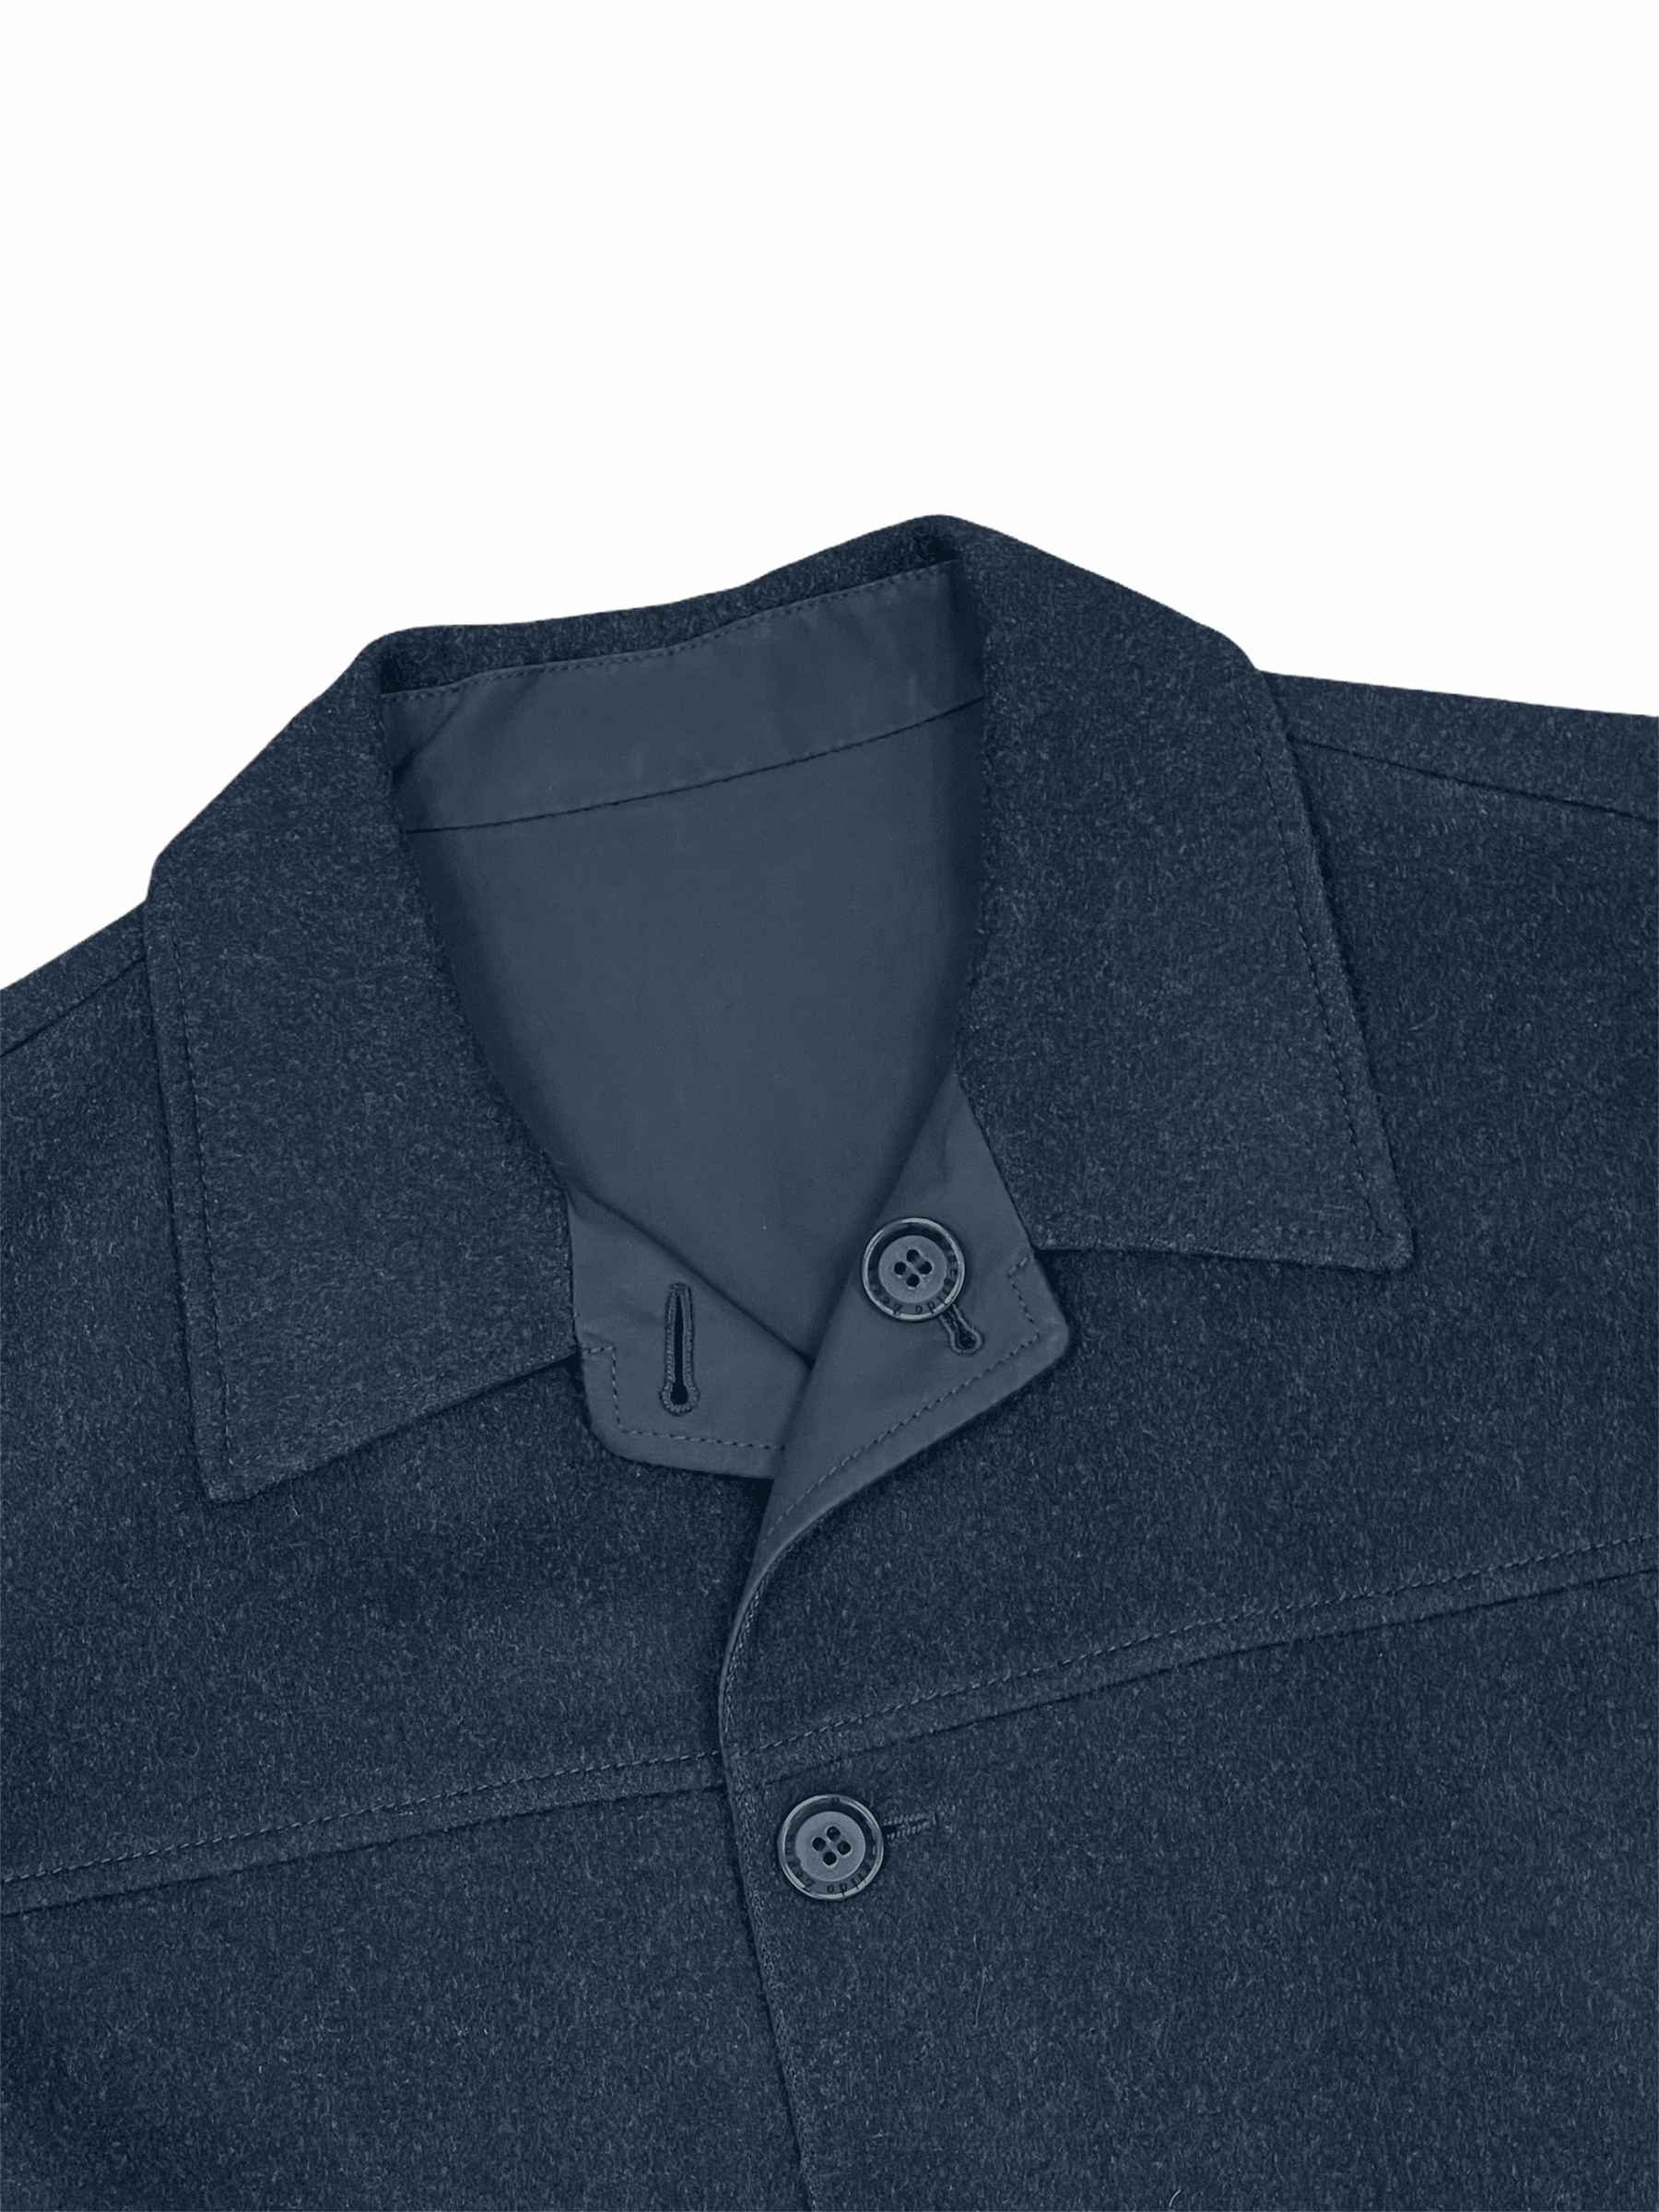 Ermenegildo Zegna Black Charcoal Reversible Travel Coat—Genuine Design luxury consignment